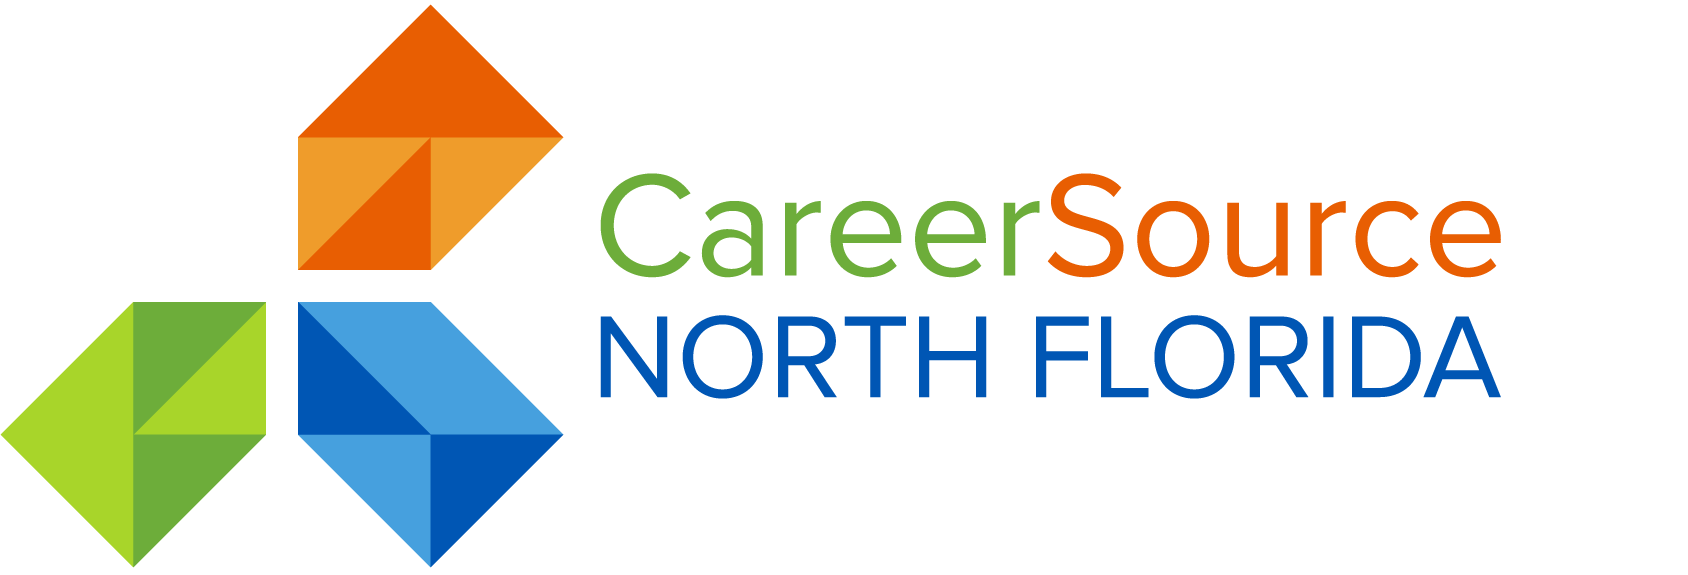 CareerSource North Florida Logo